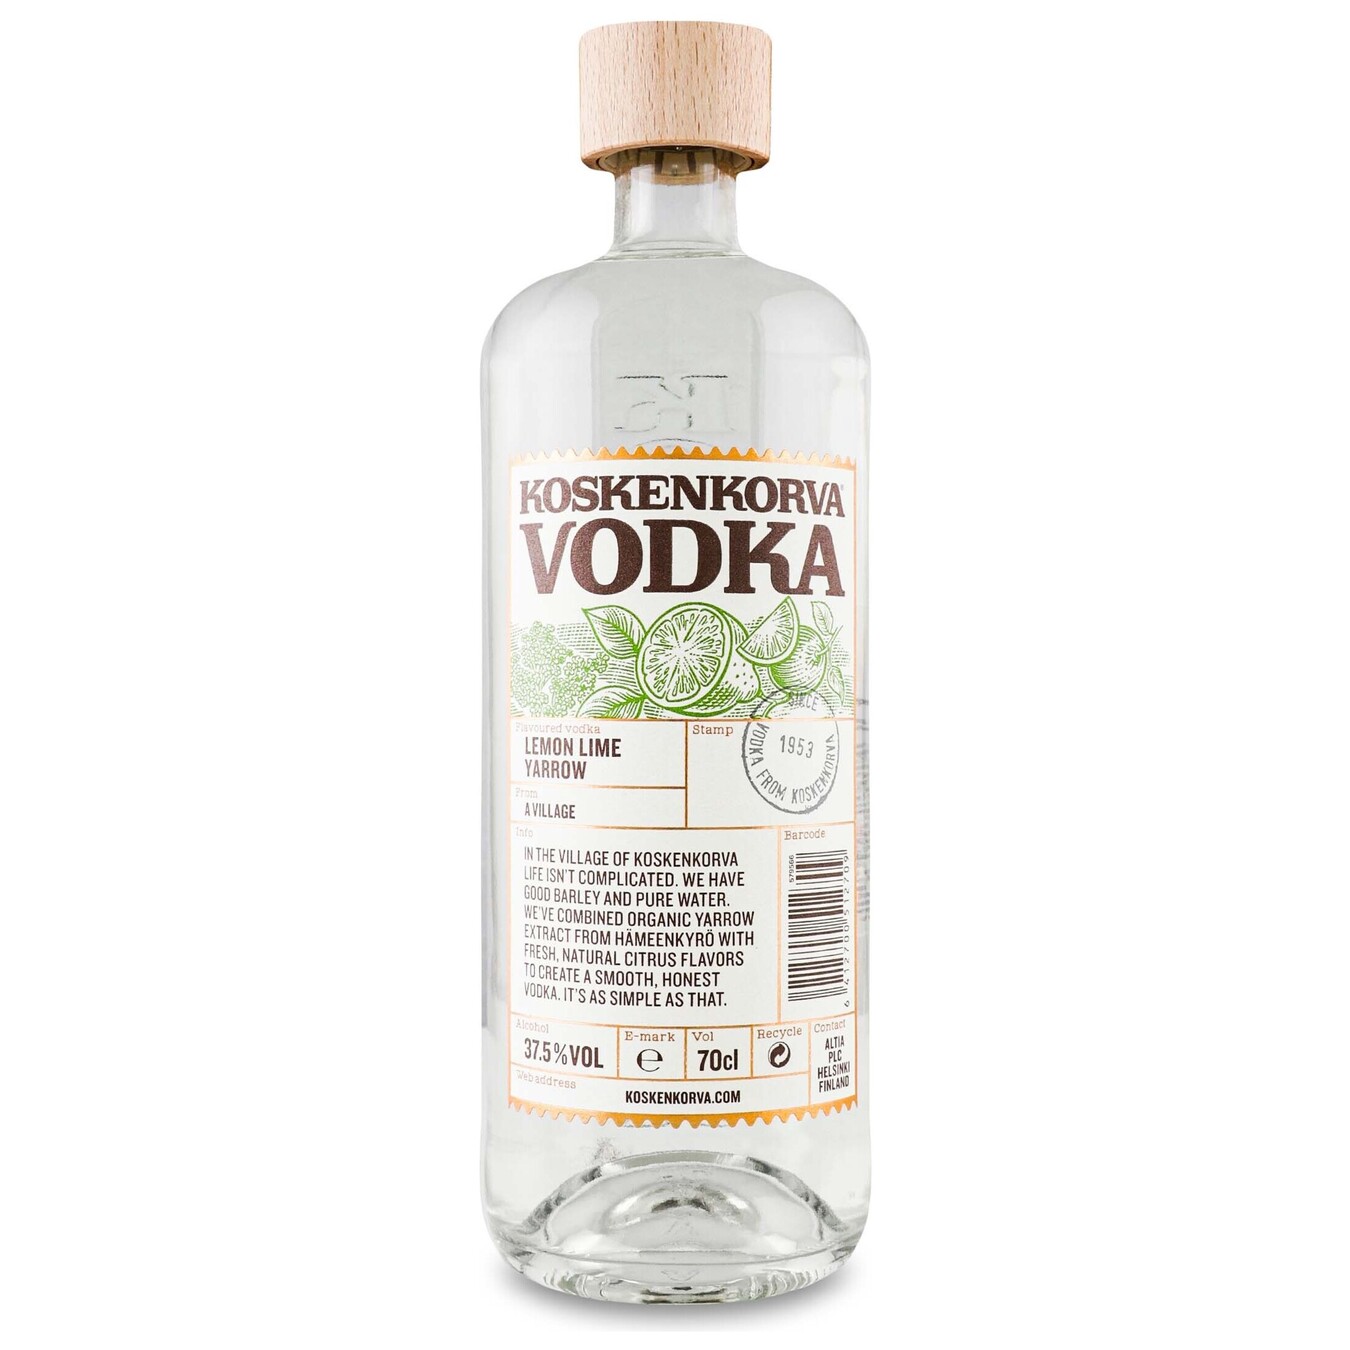 Vodka Koskenkorva Lemon Lime Yarrow 37.5% 0.7l